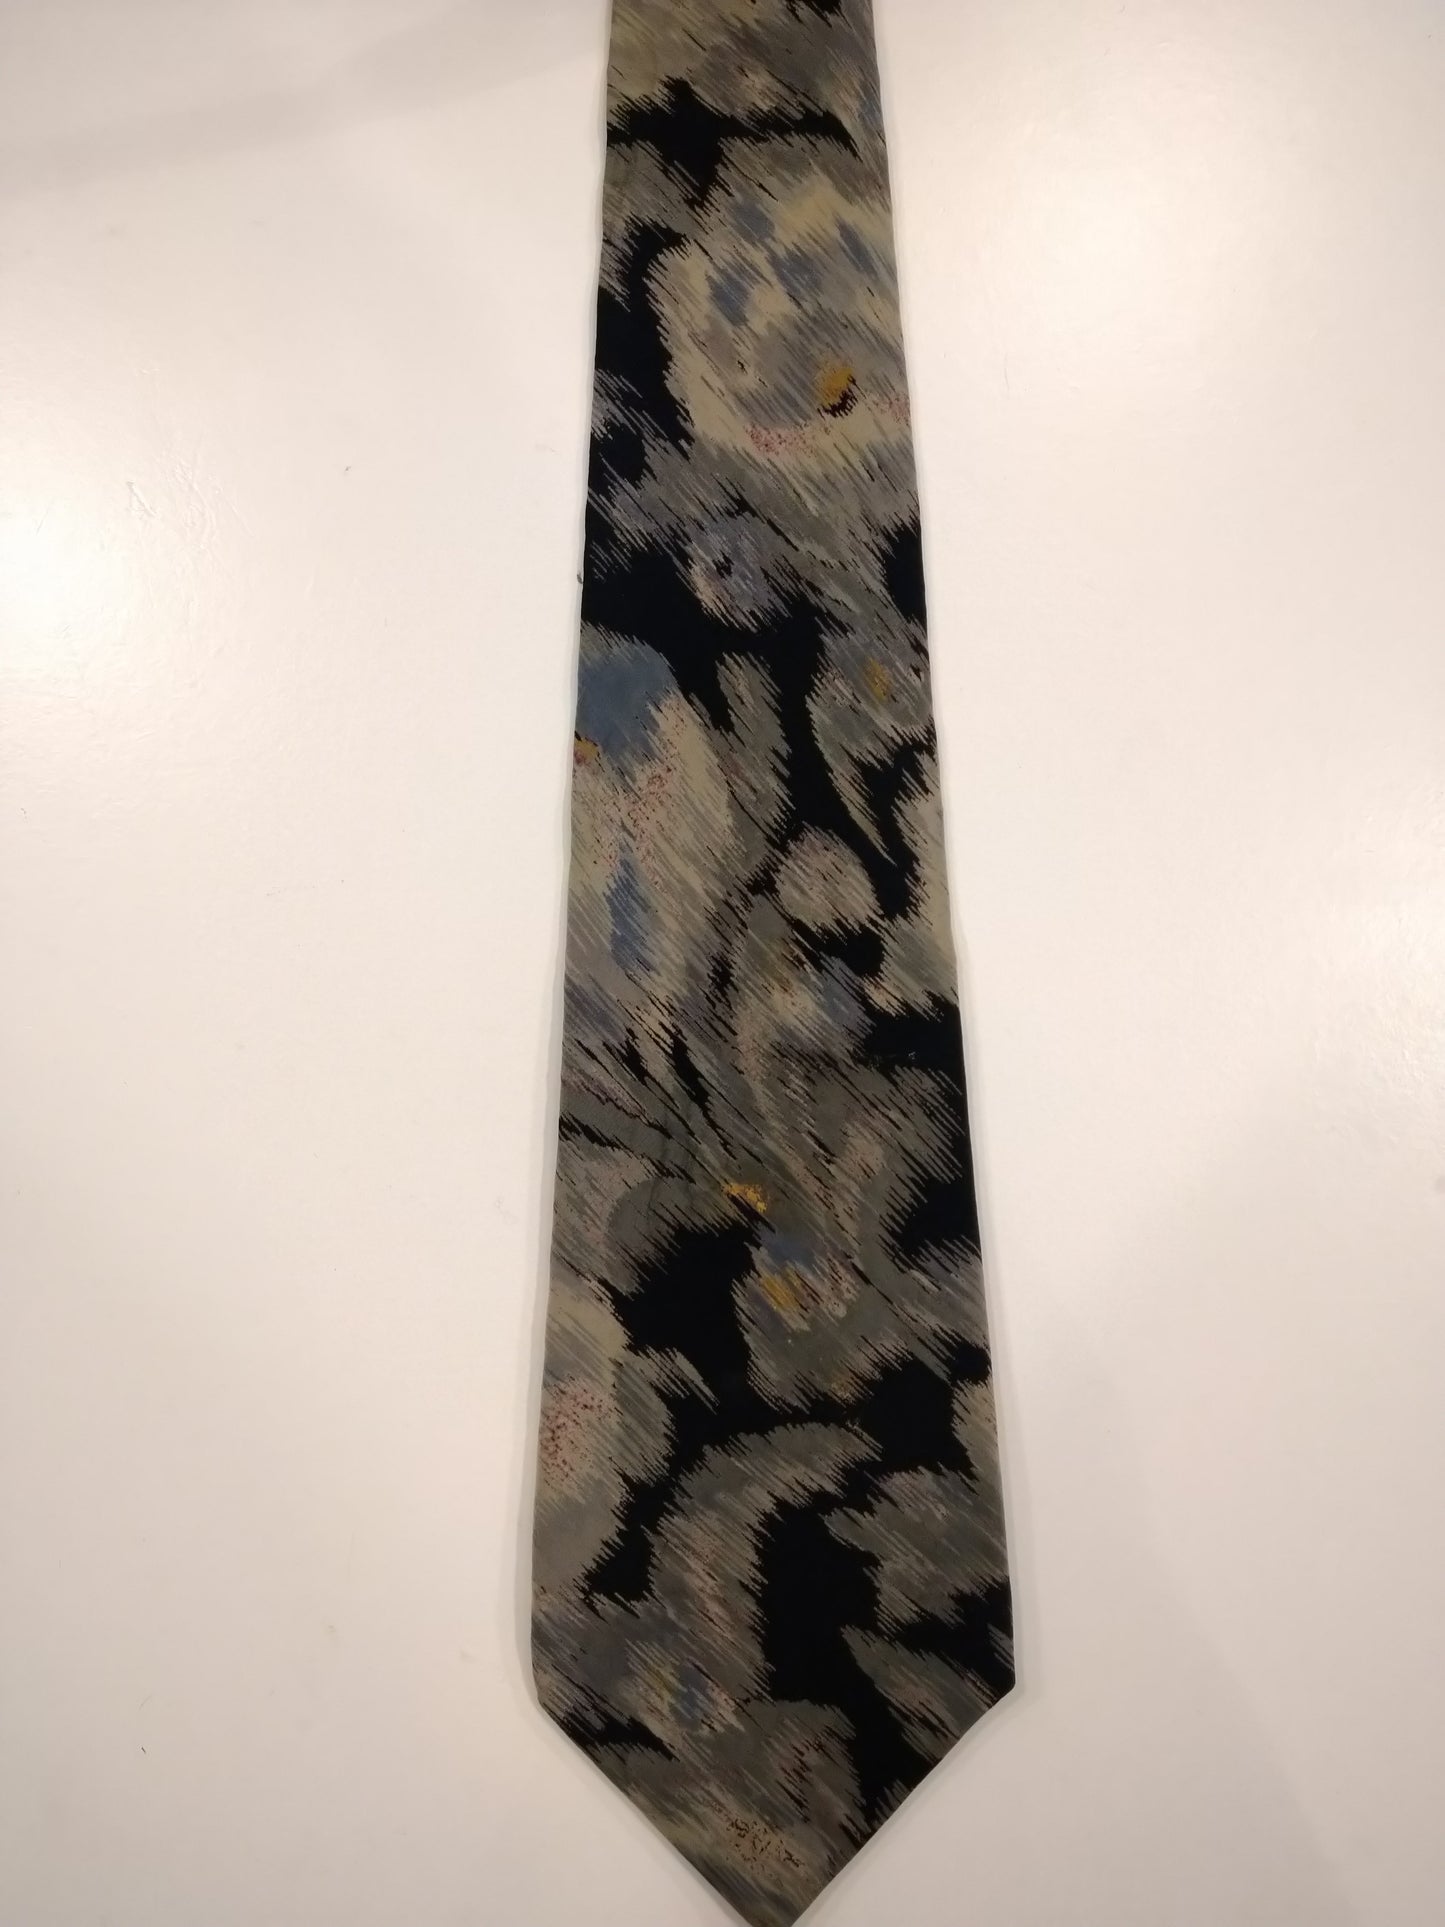 La corbata lateral de Hemley. Buen motivo.